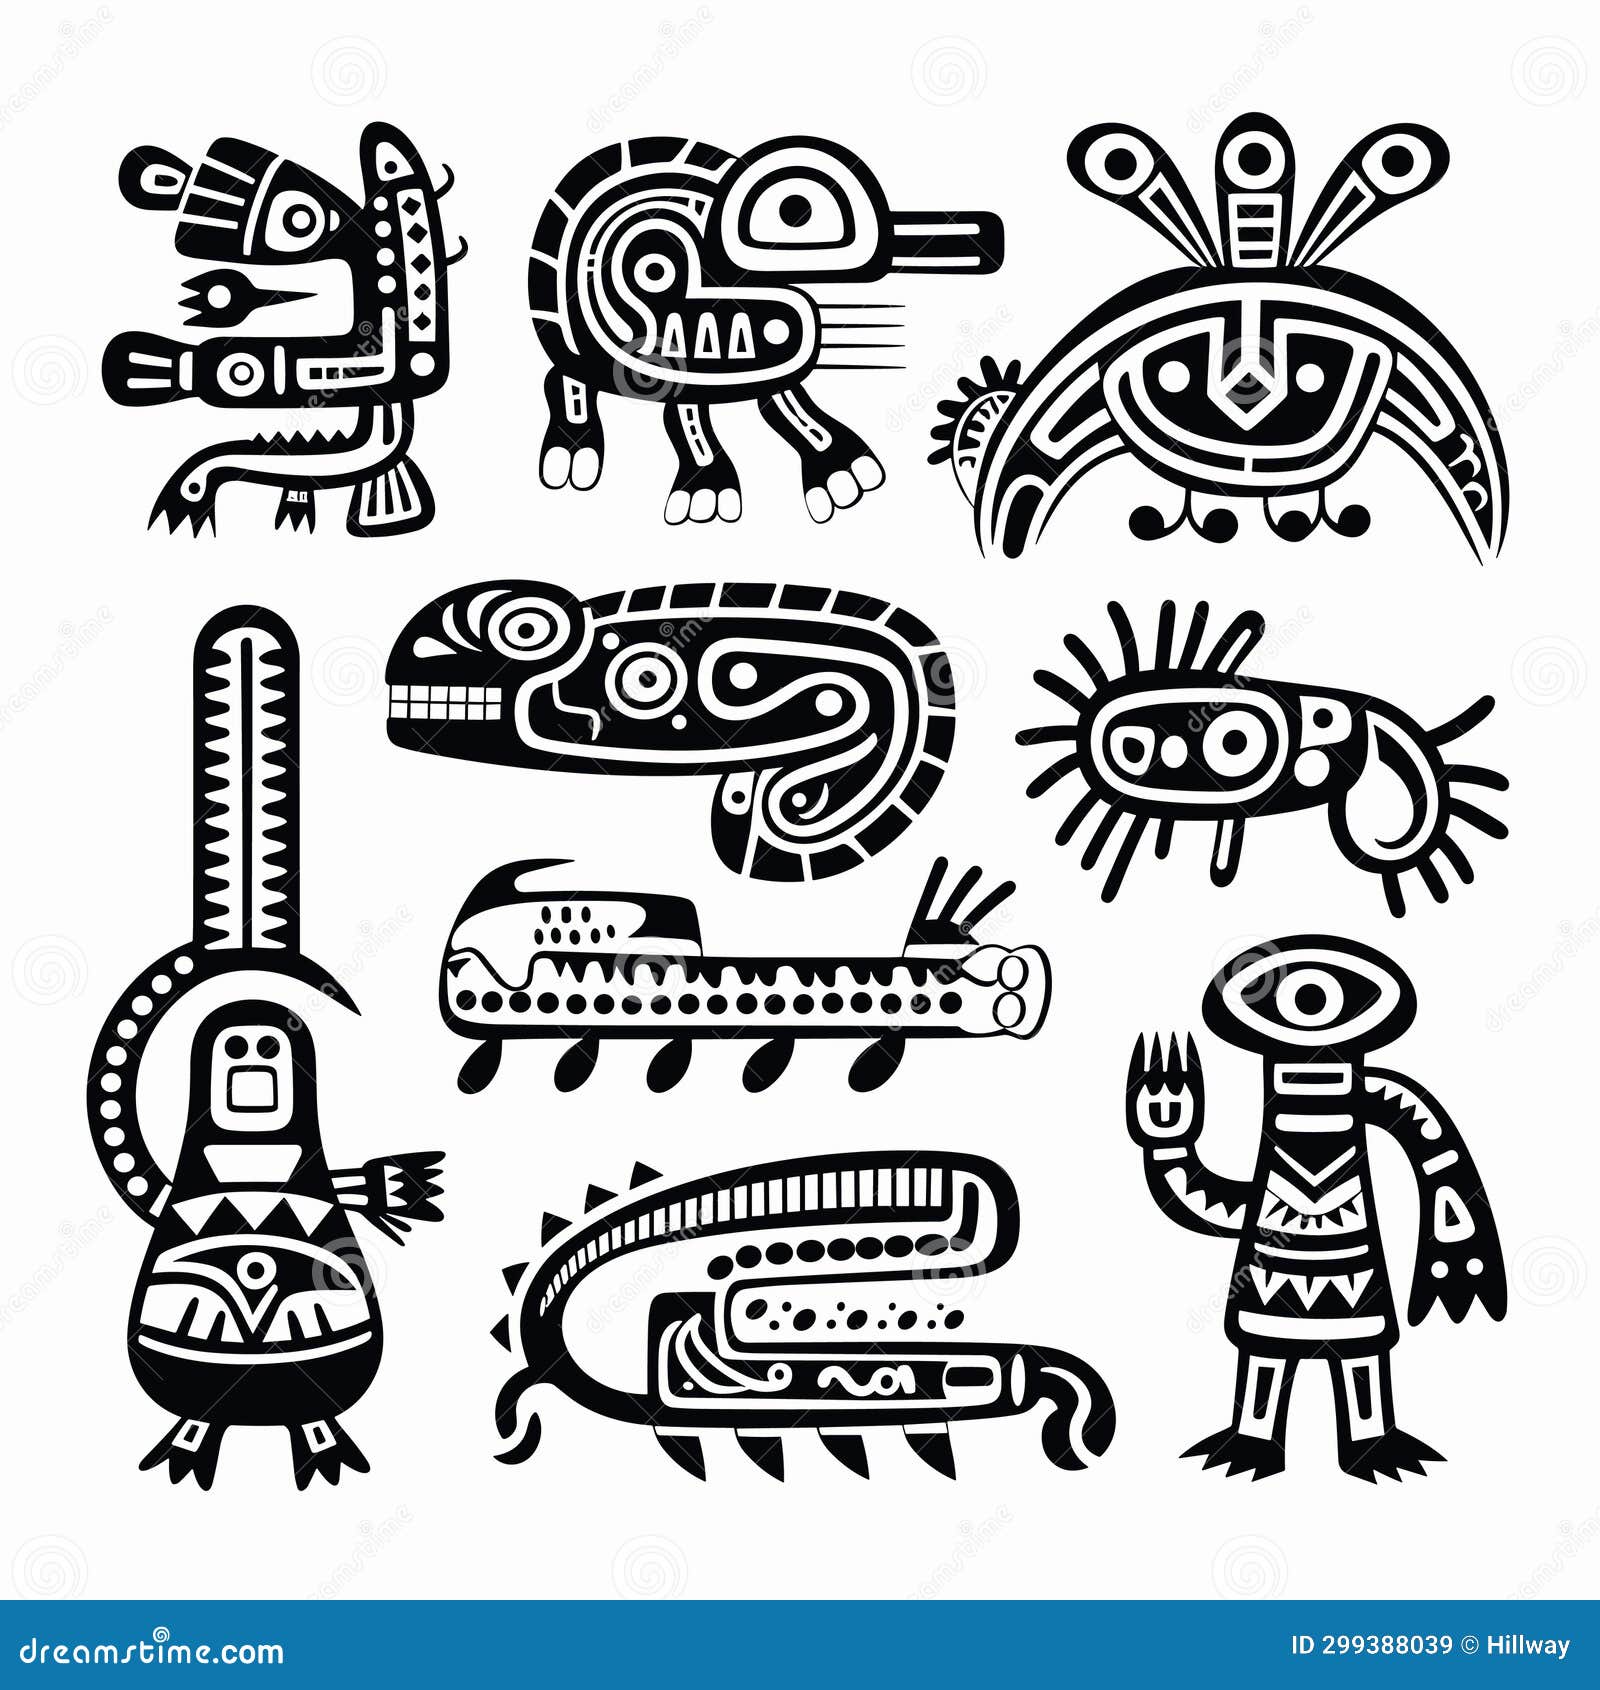 Aztec tattoo meaning, symbols and design ideas for men | Aztec tattoo, Aztec  tattoo designs, Aztec warrior tattoo